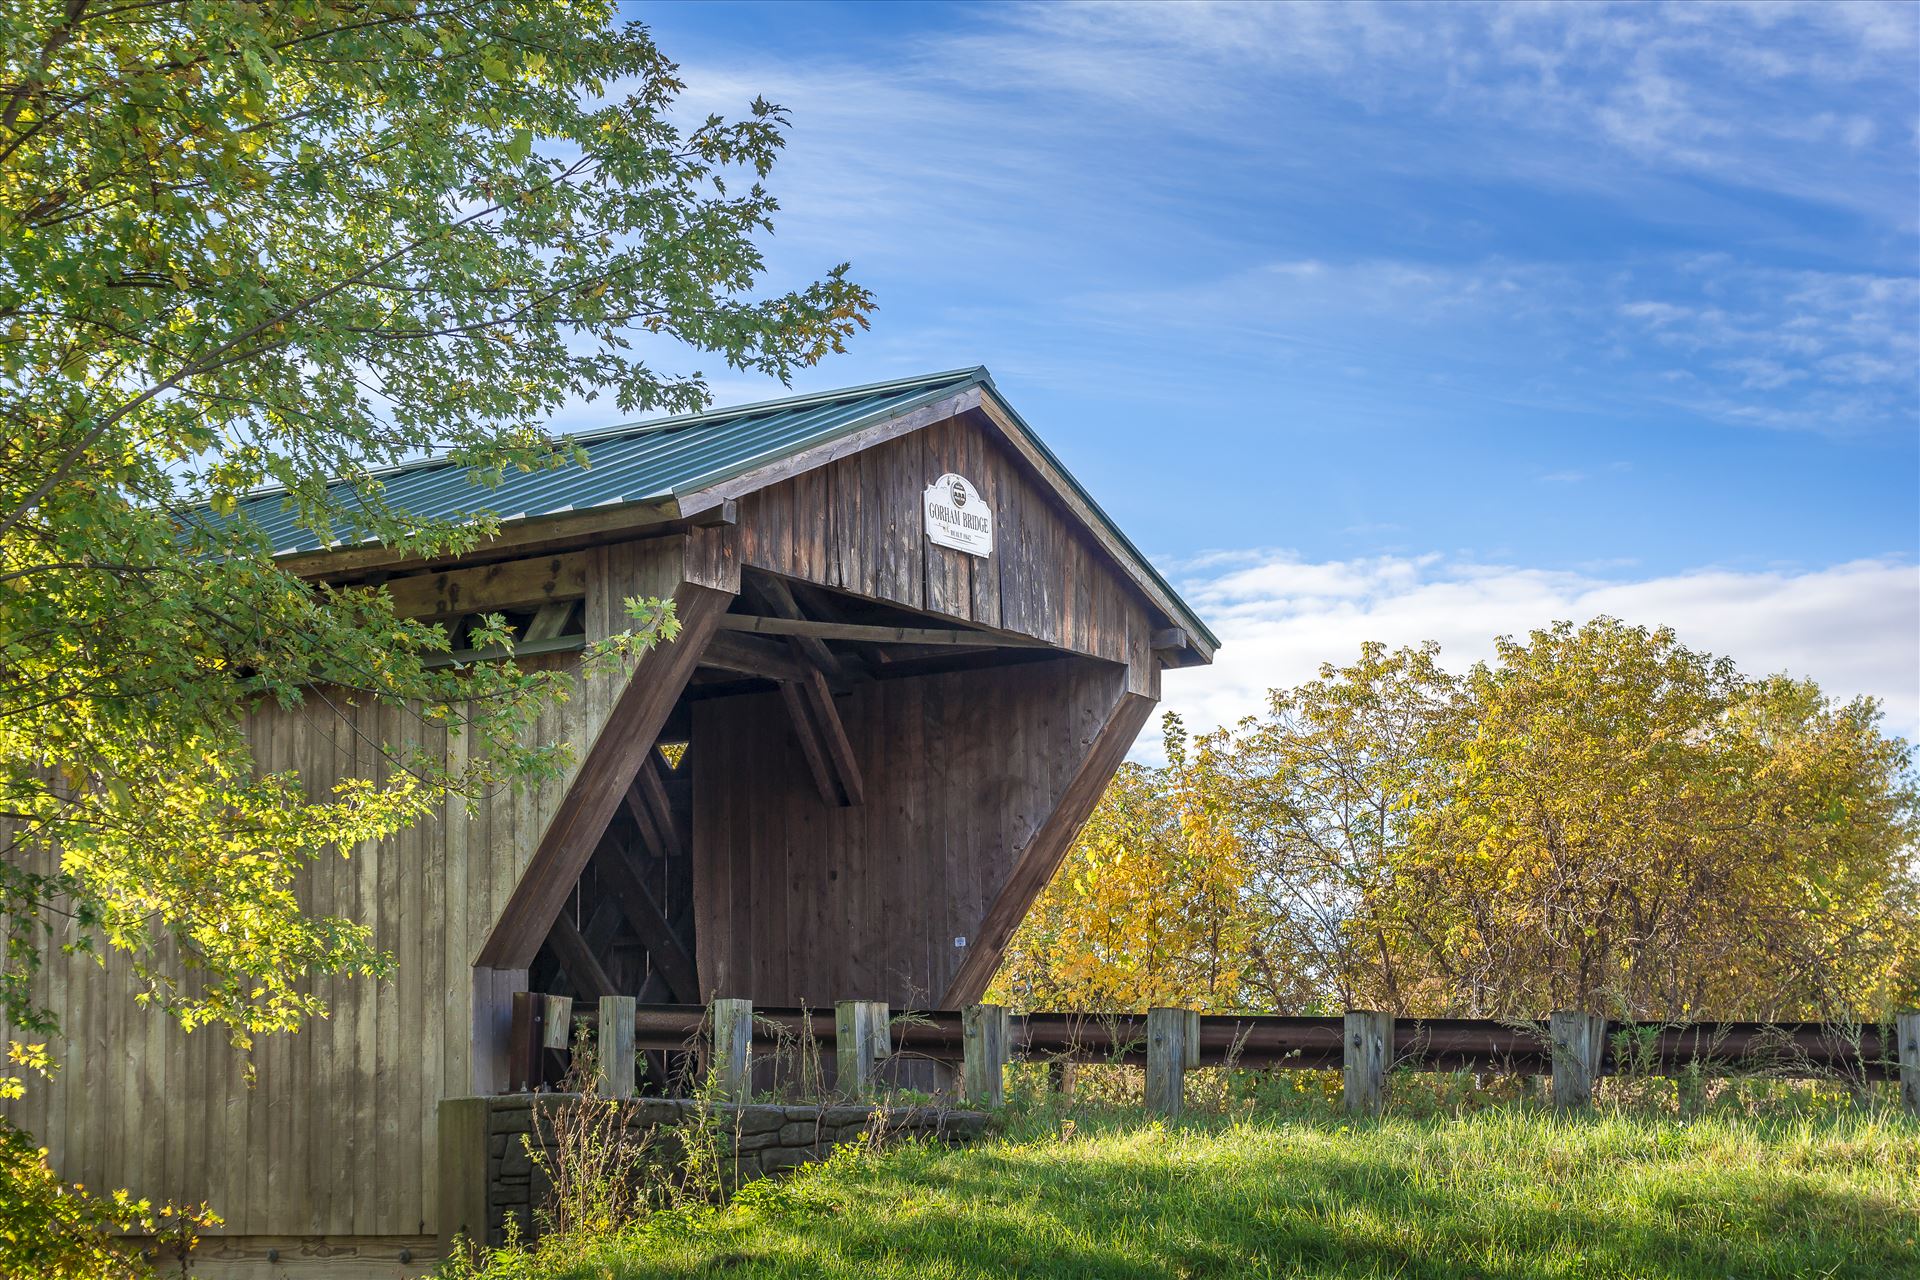 Gorham Covered Bridge - Proctor, Vermont October 2015 by Buckmaster